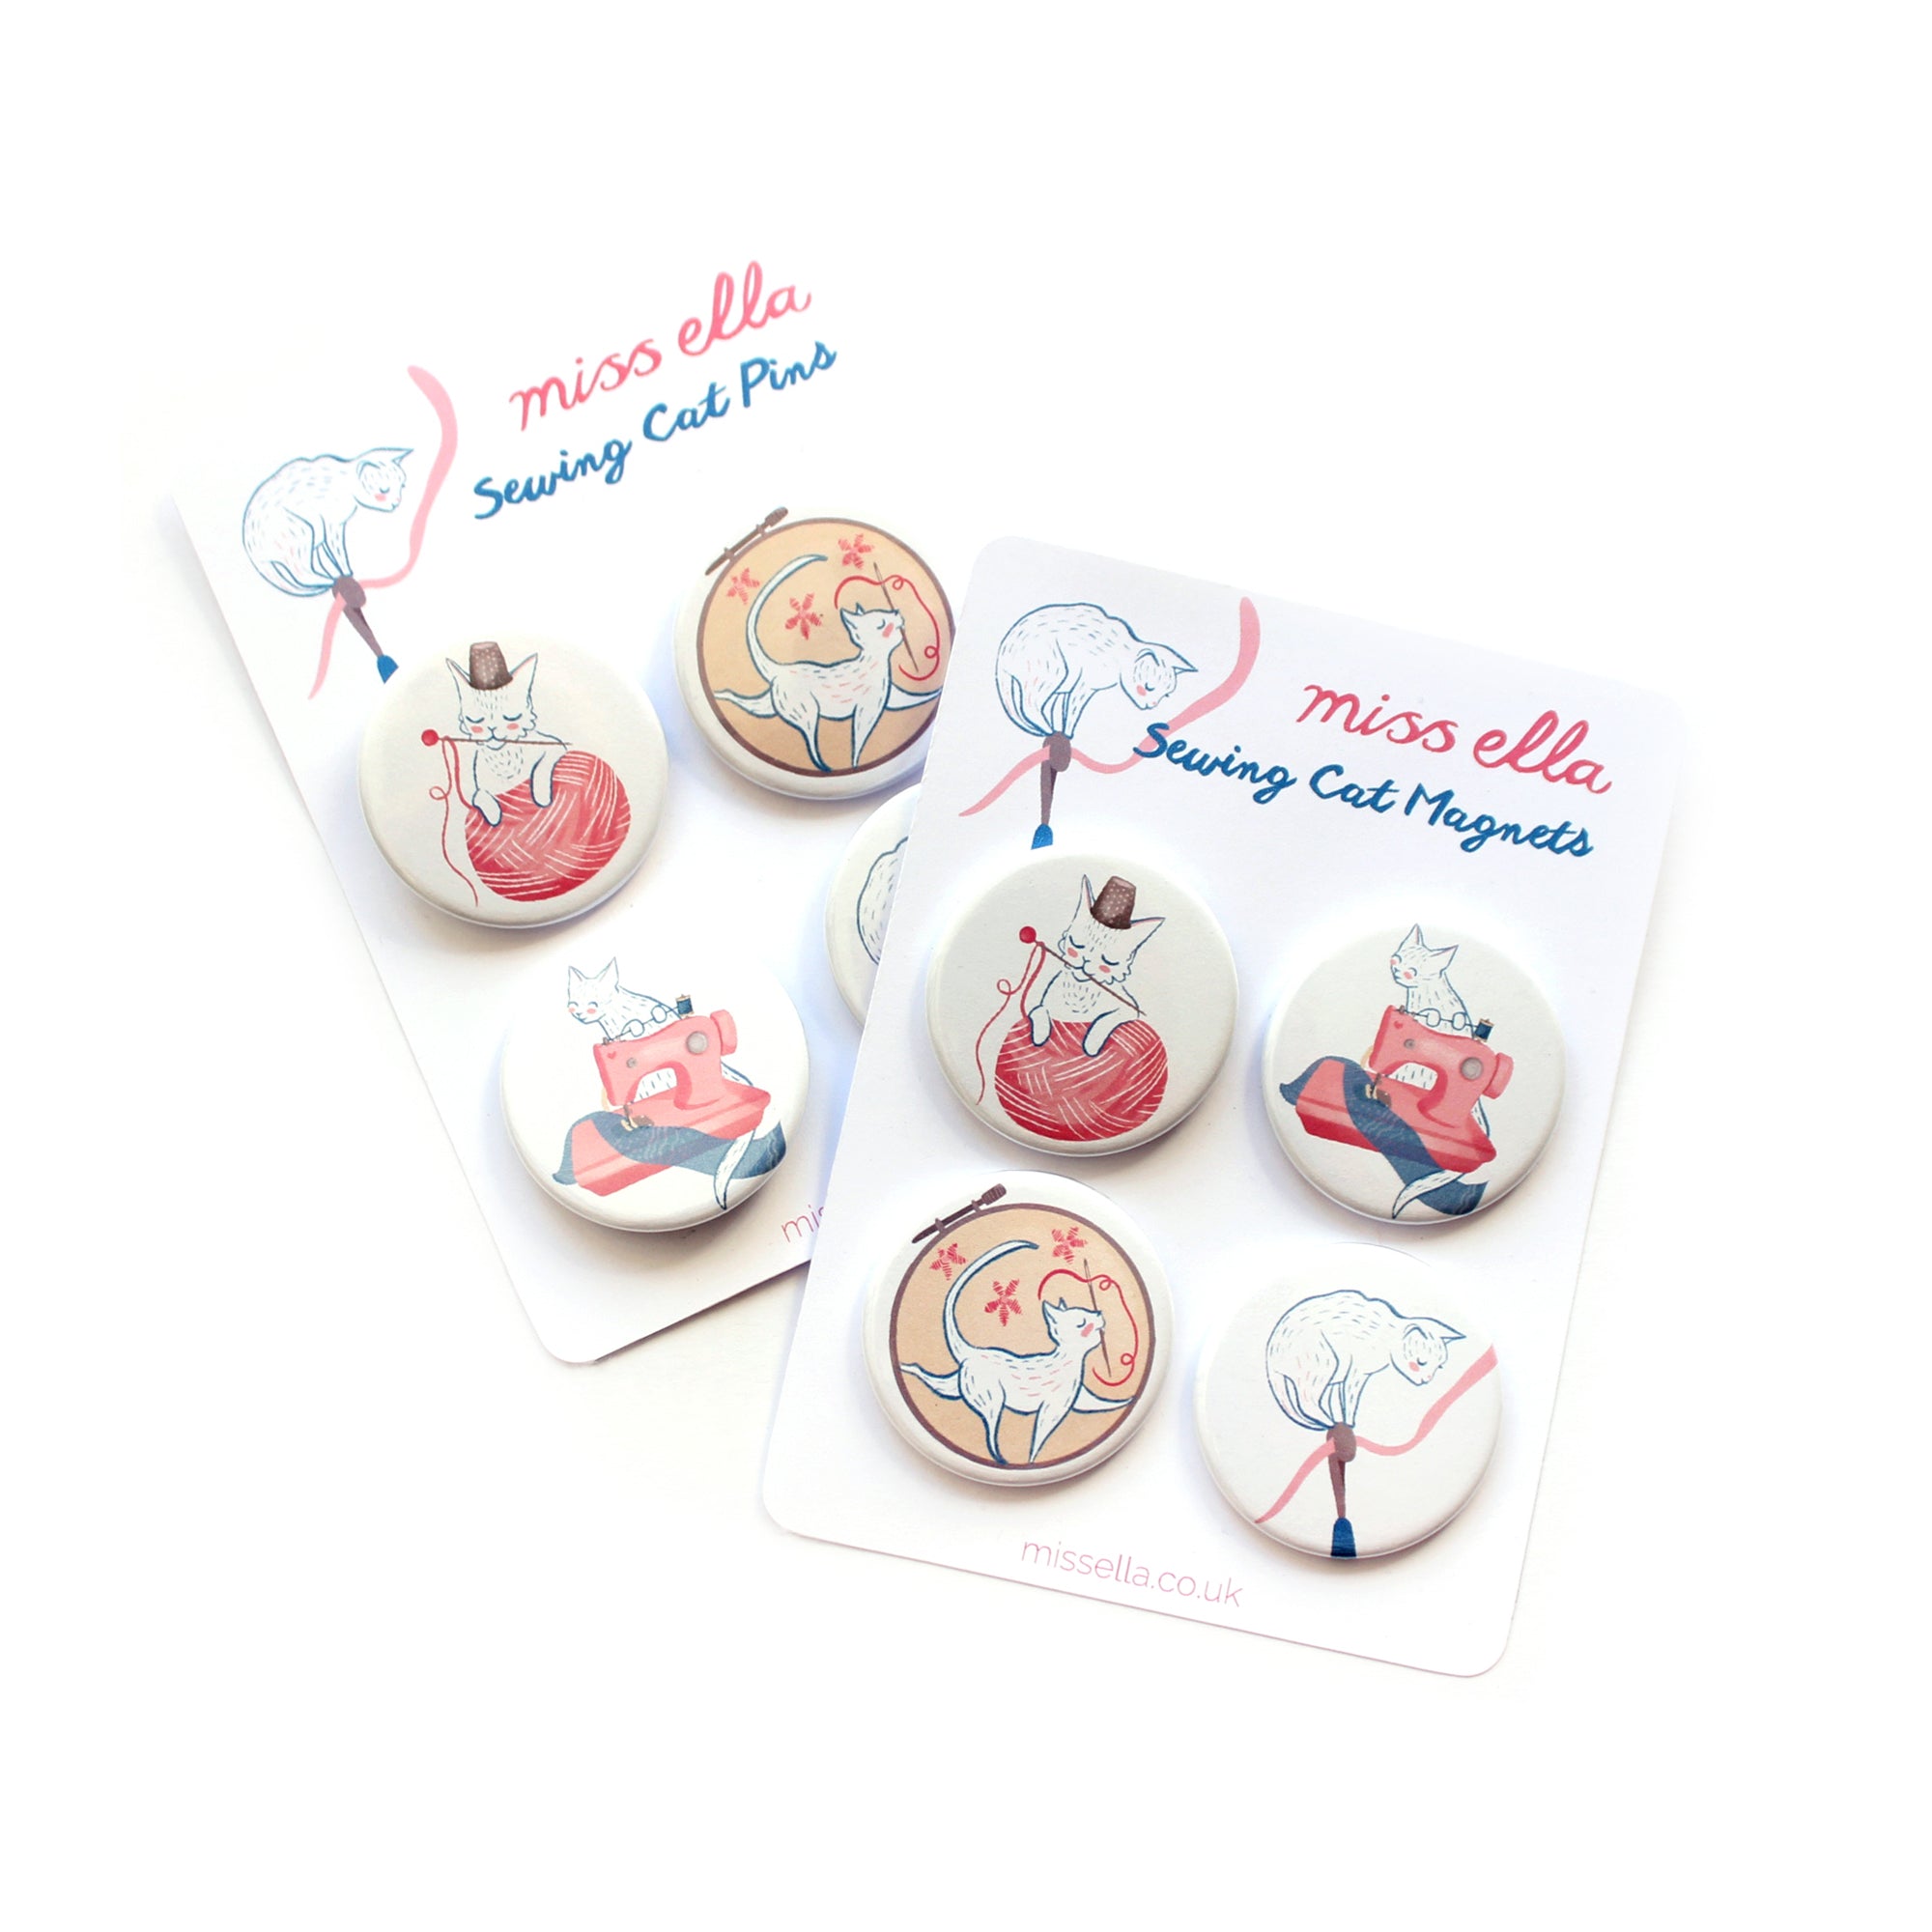 Sewing Cat Pin badges -  Fridge magnets x 4